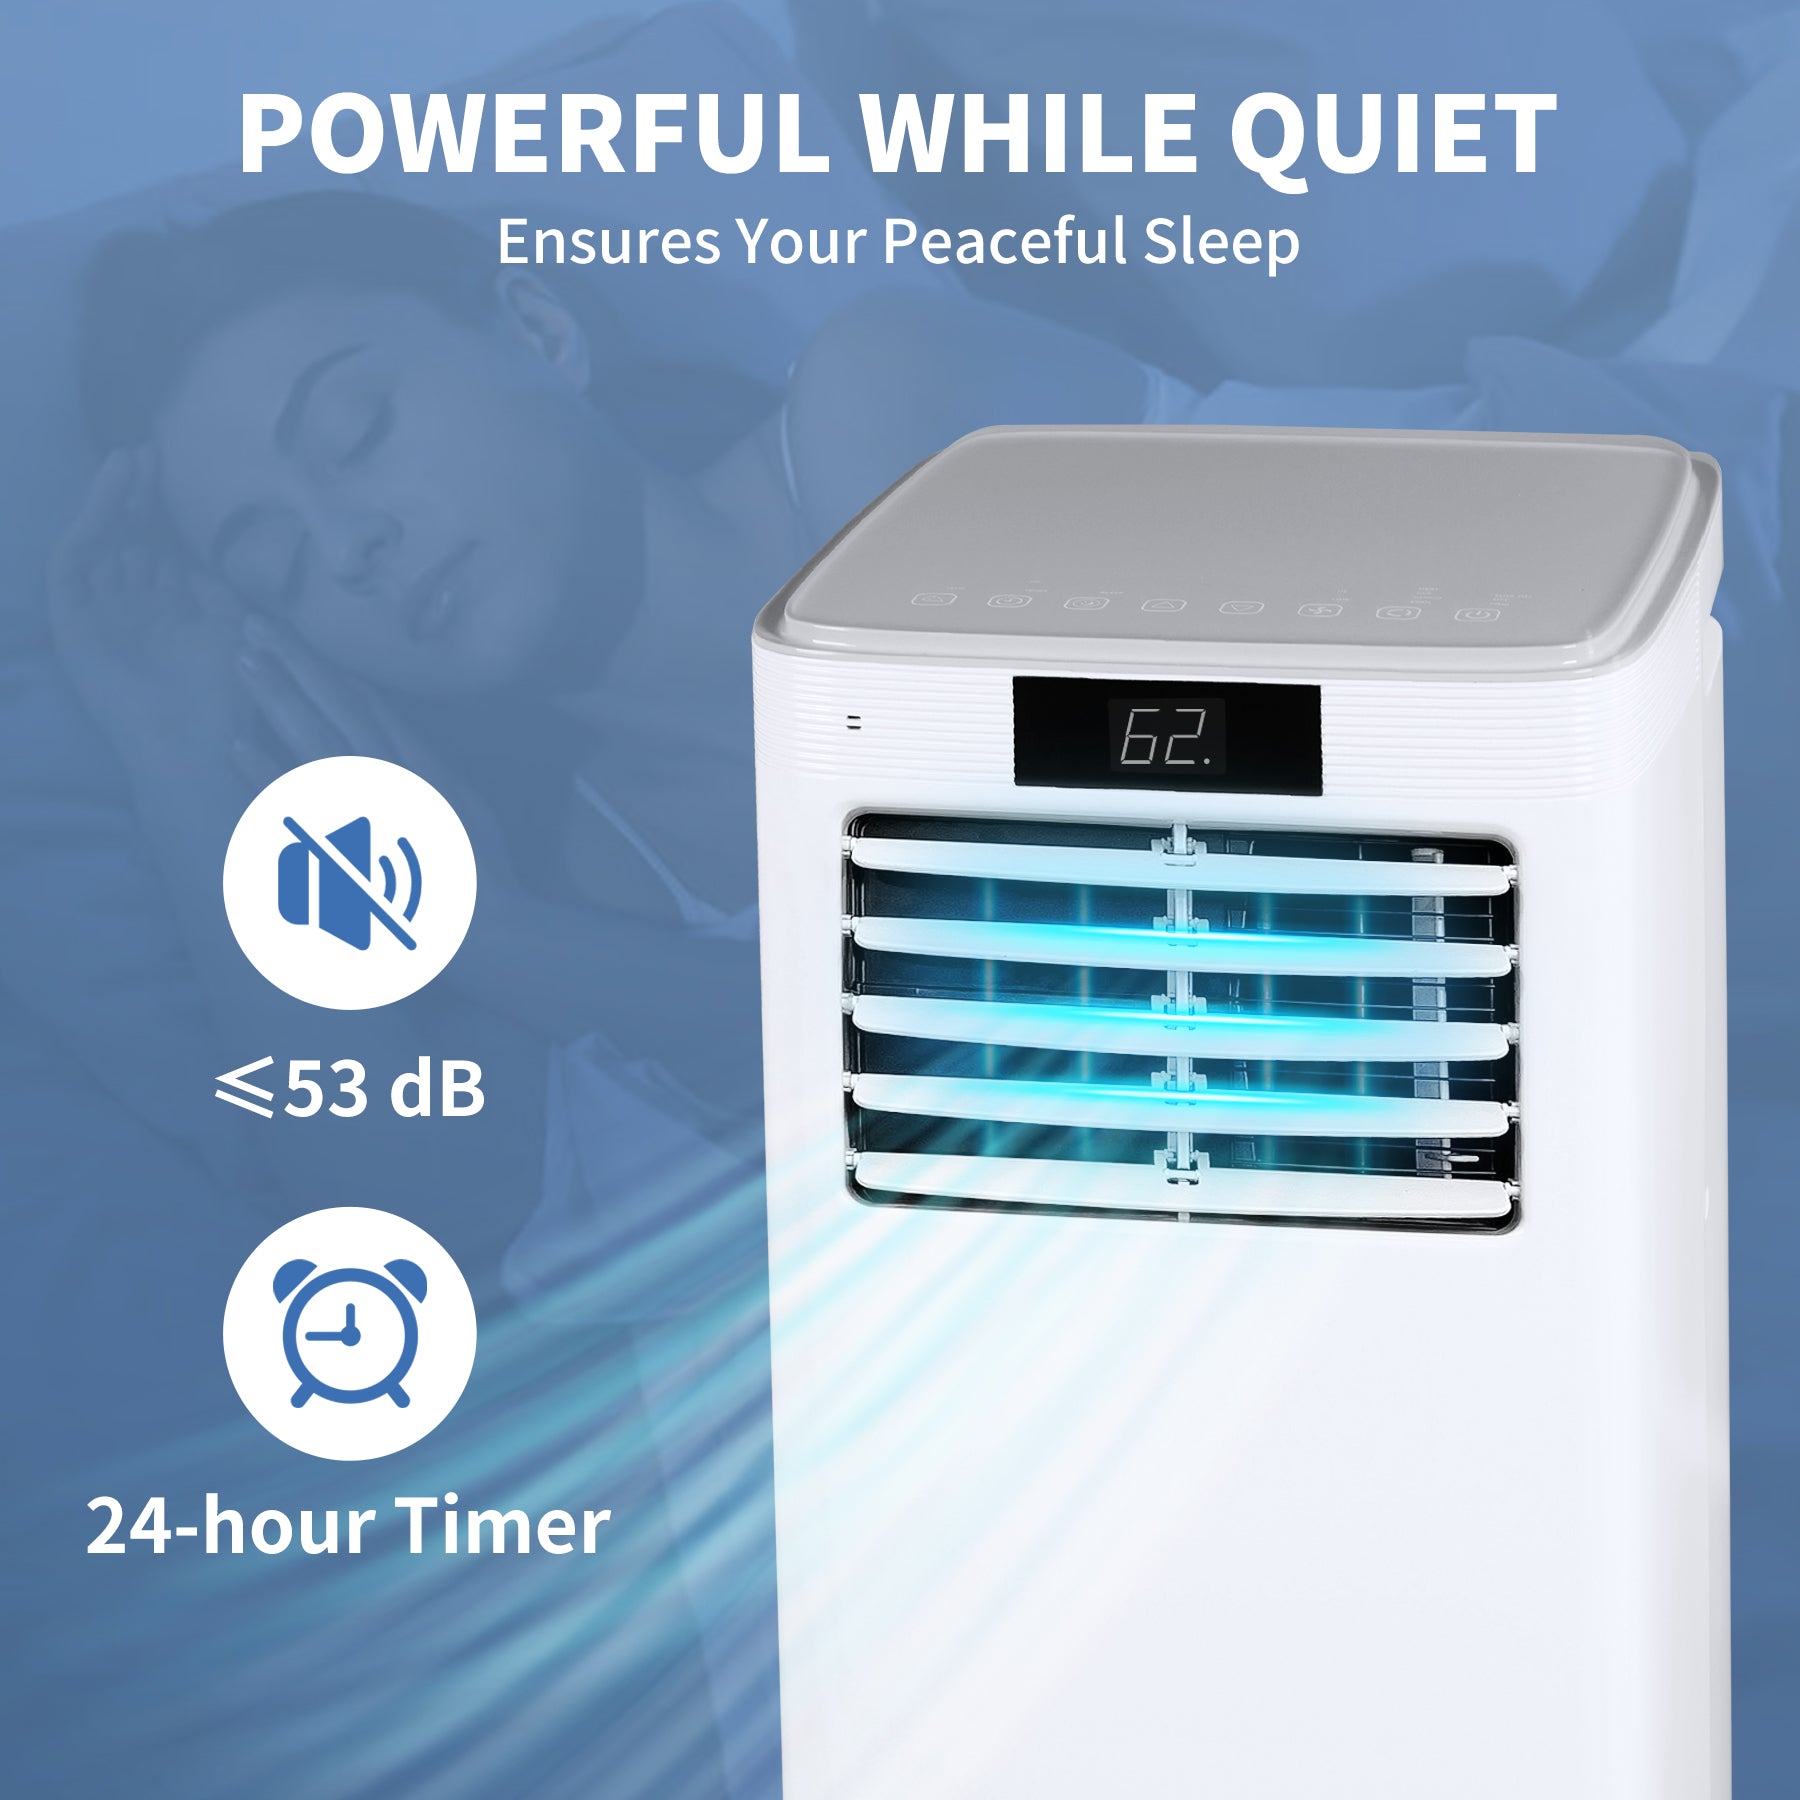 9,000 BTU Portable Air Conditioner, White